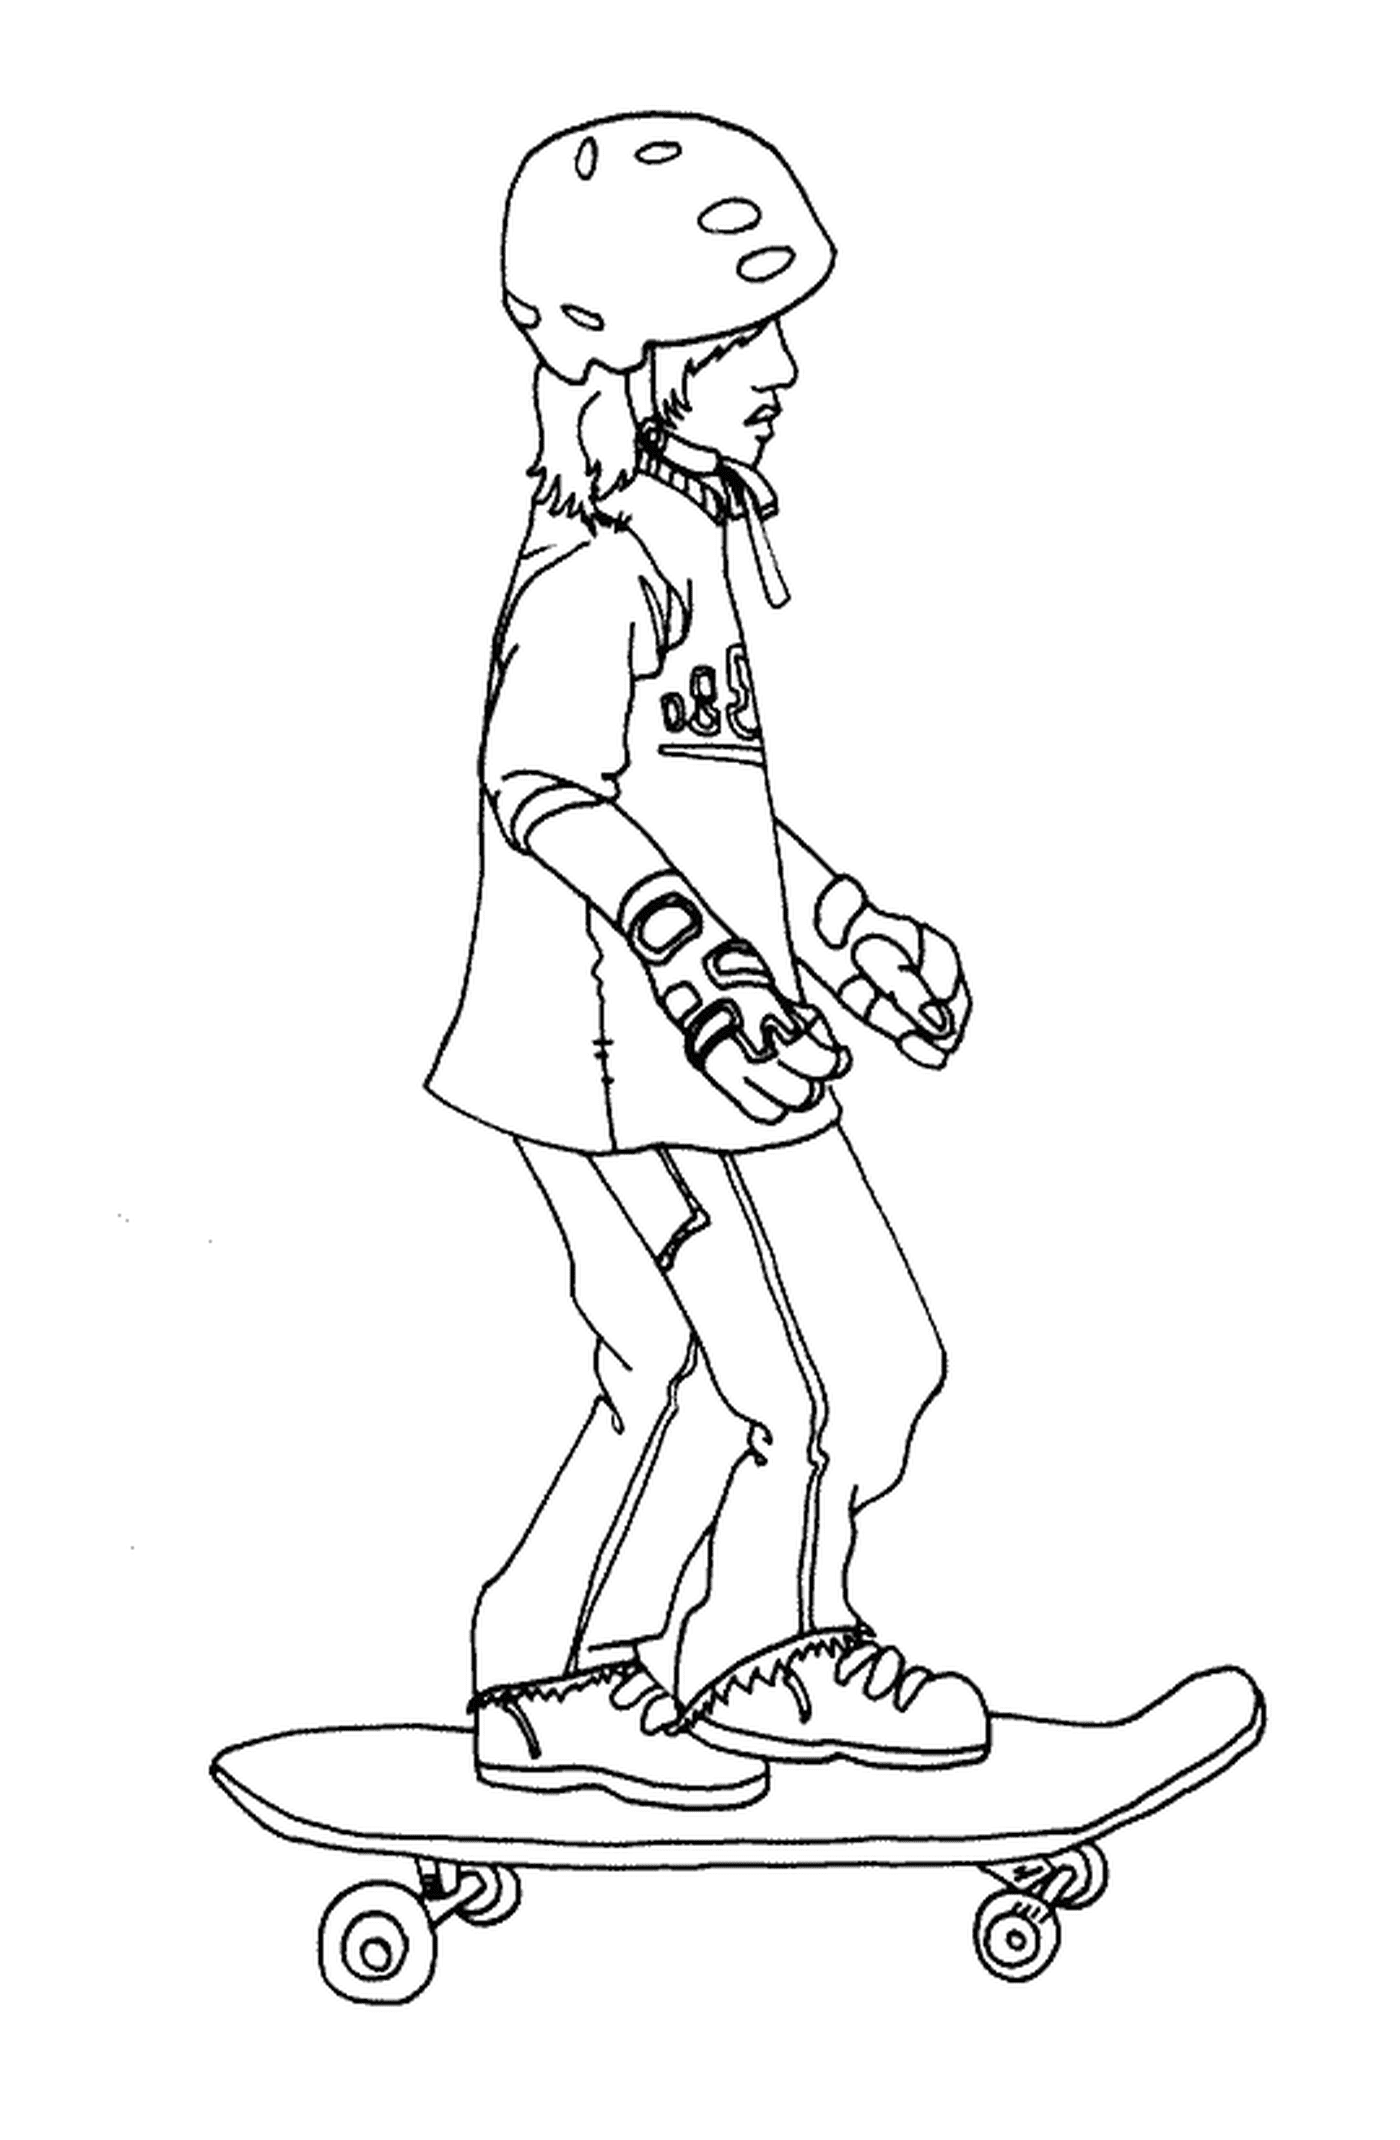   Garçon faisant du skateboard 